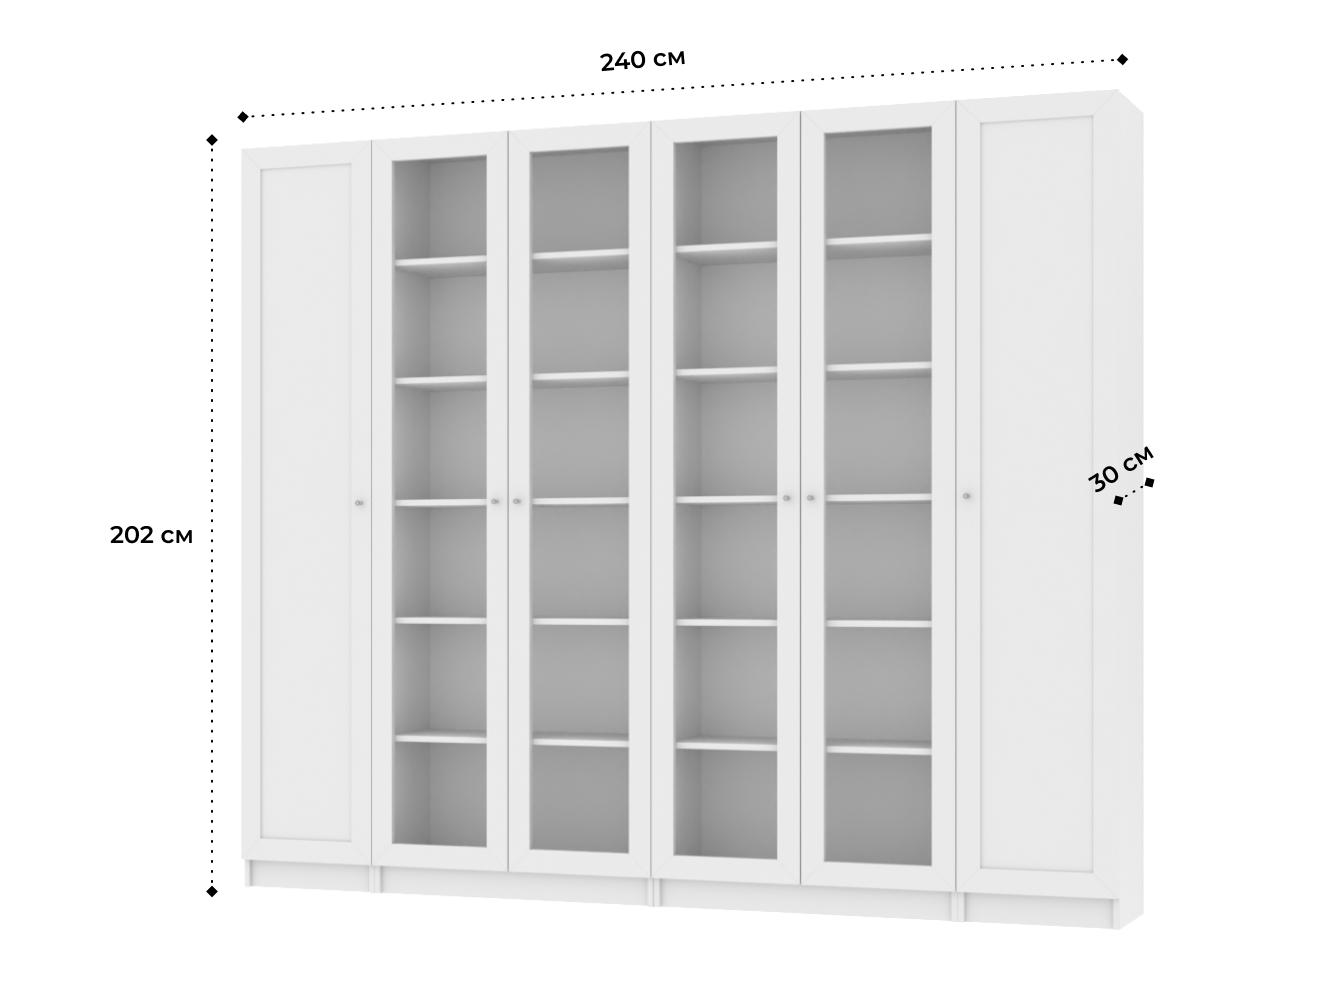 Книжный шкаф Билли 416 white ИКЕА (IKEA) изображение товара